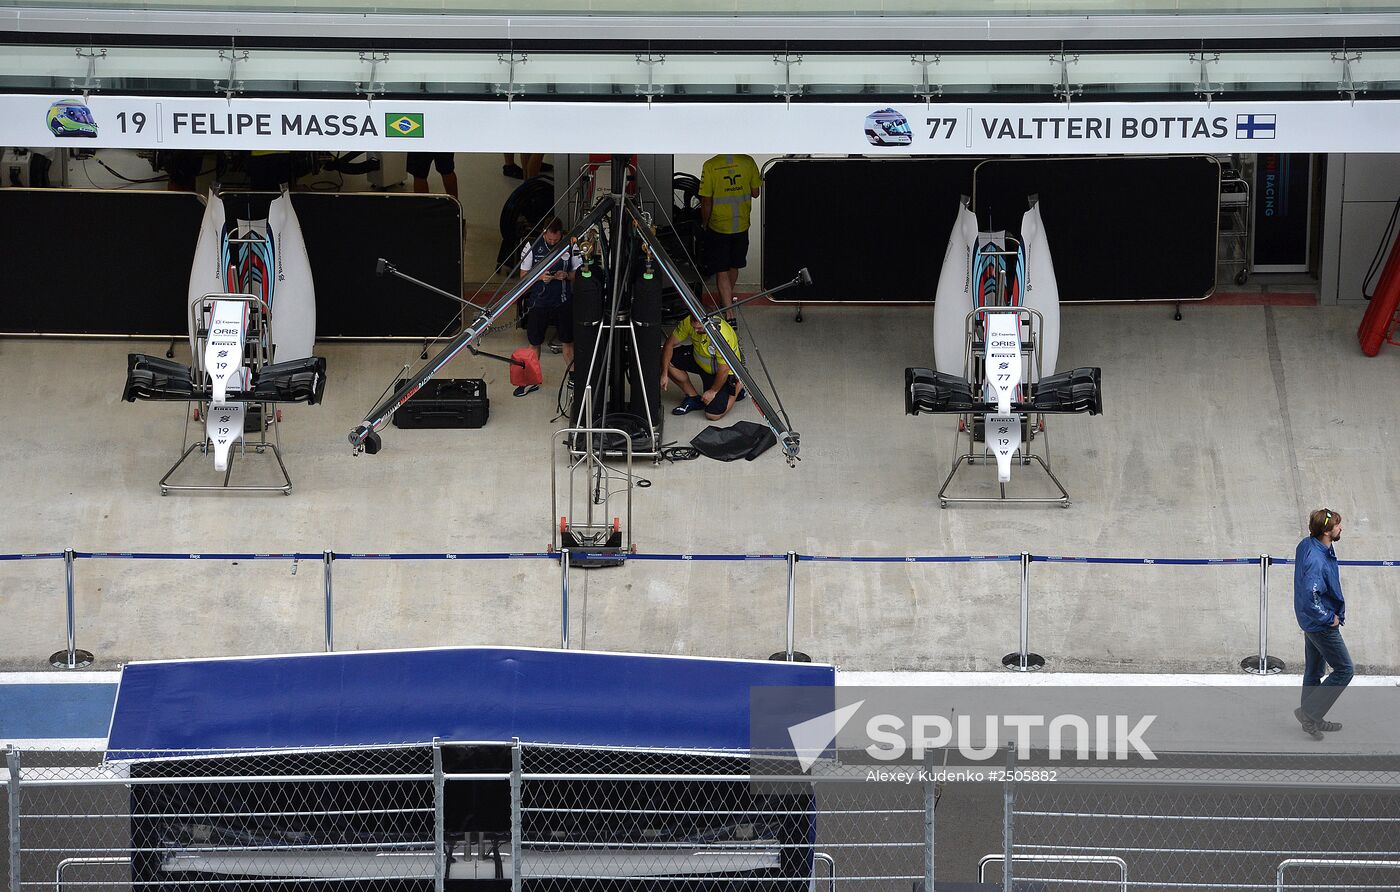 Preparing for 2014 Formula 1 Russian Grand Prix